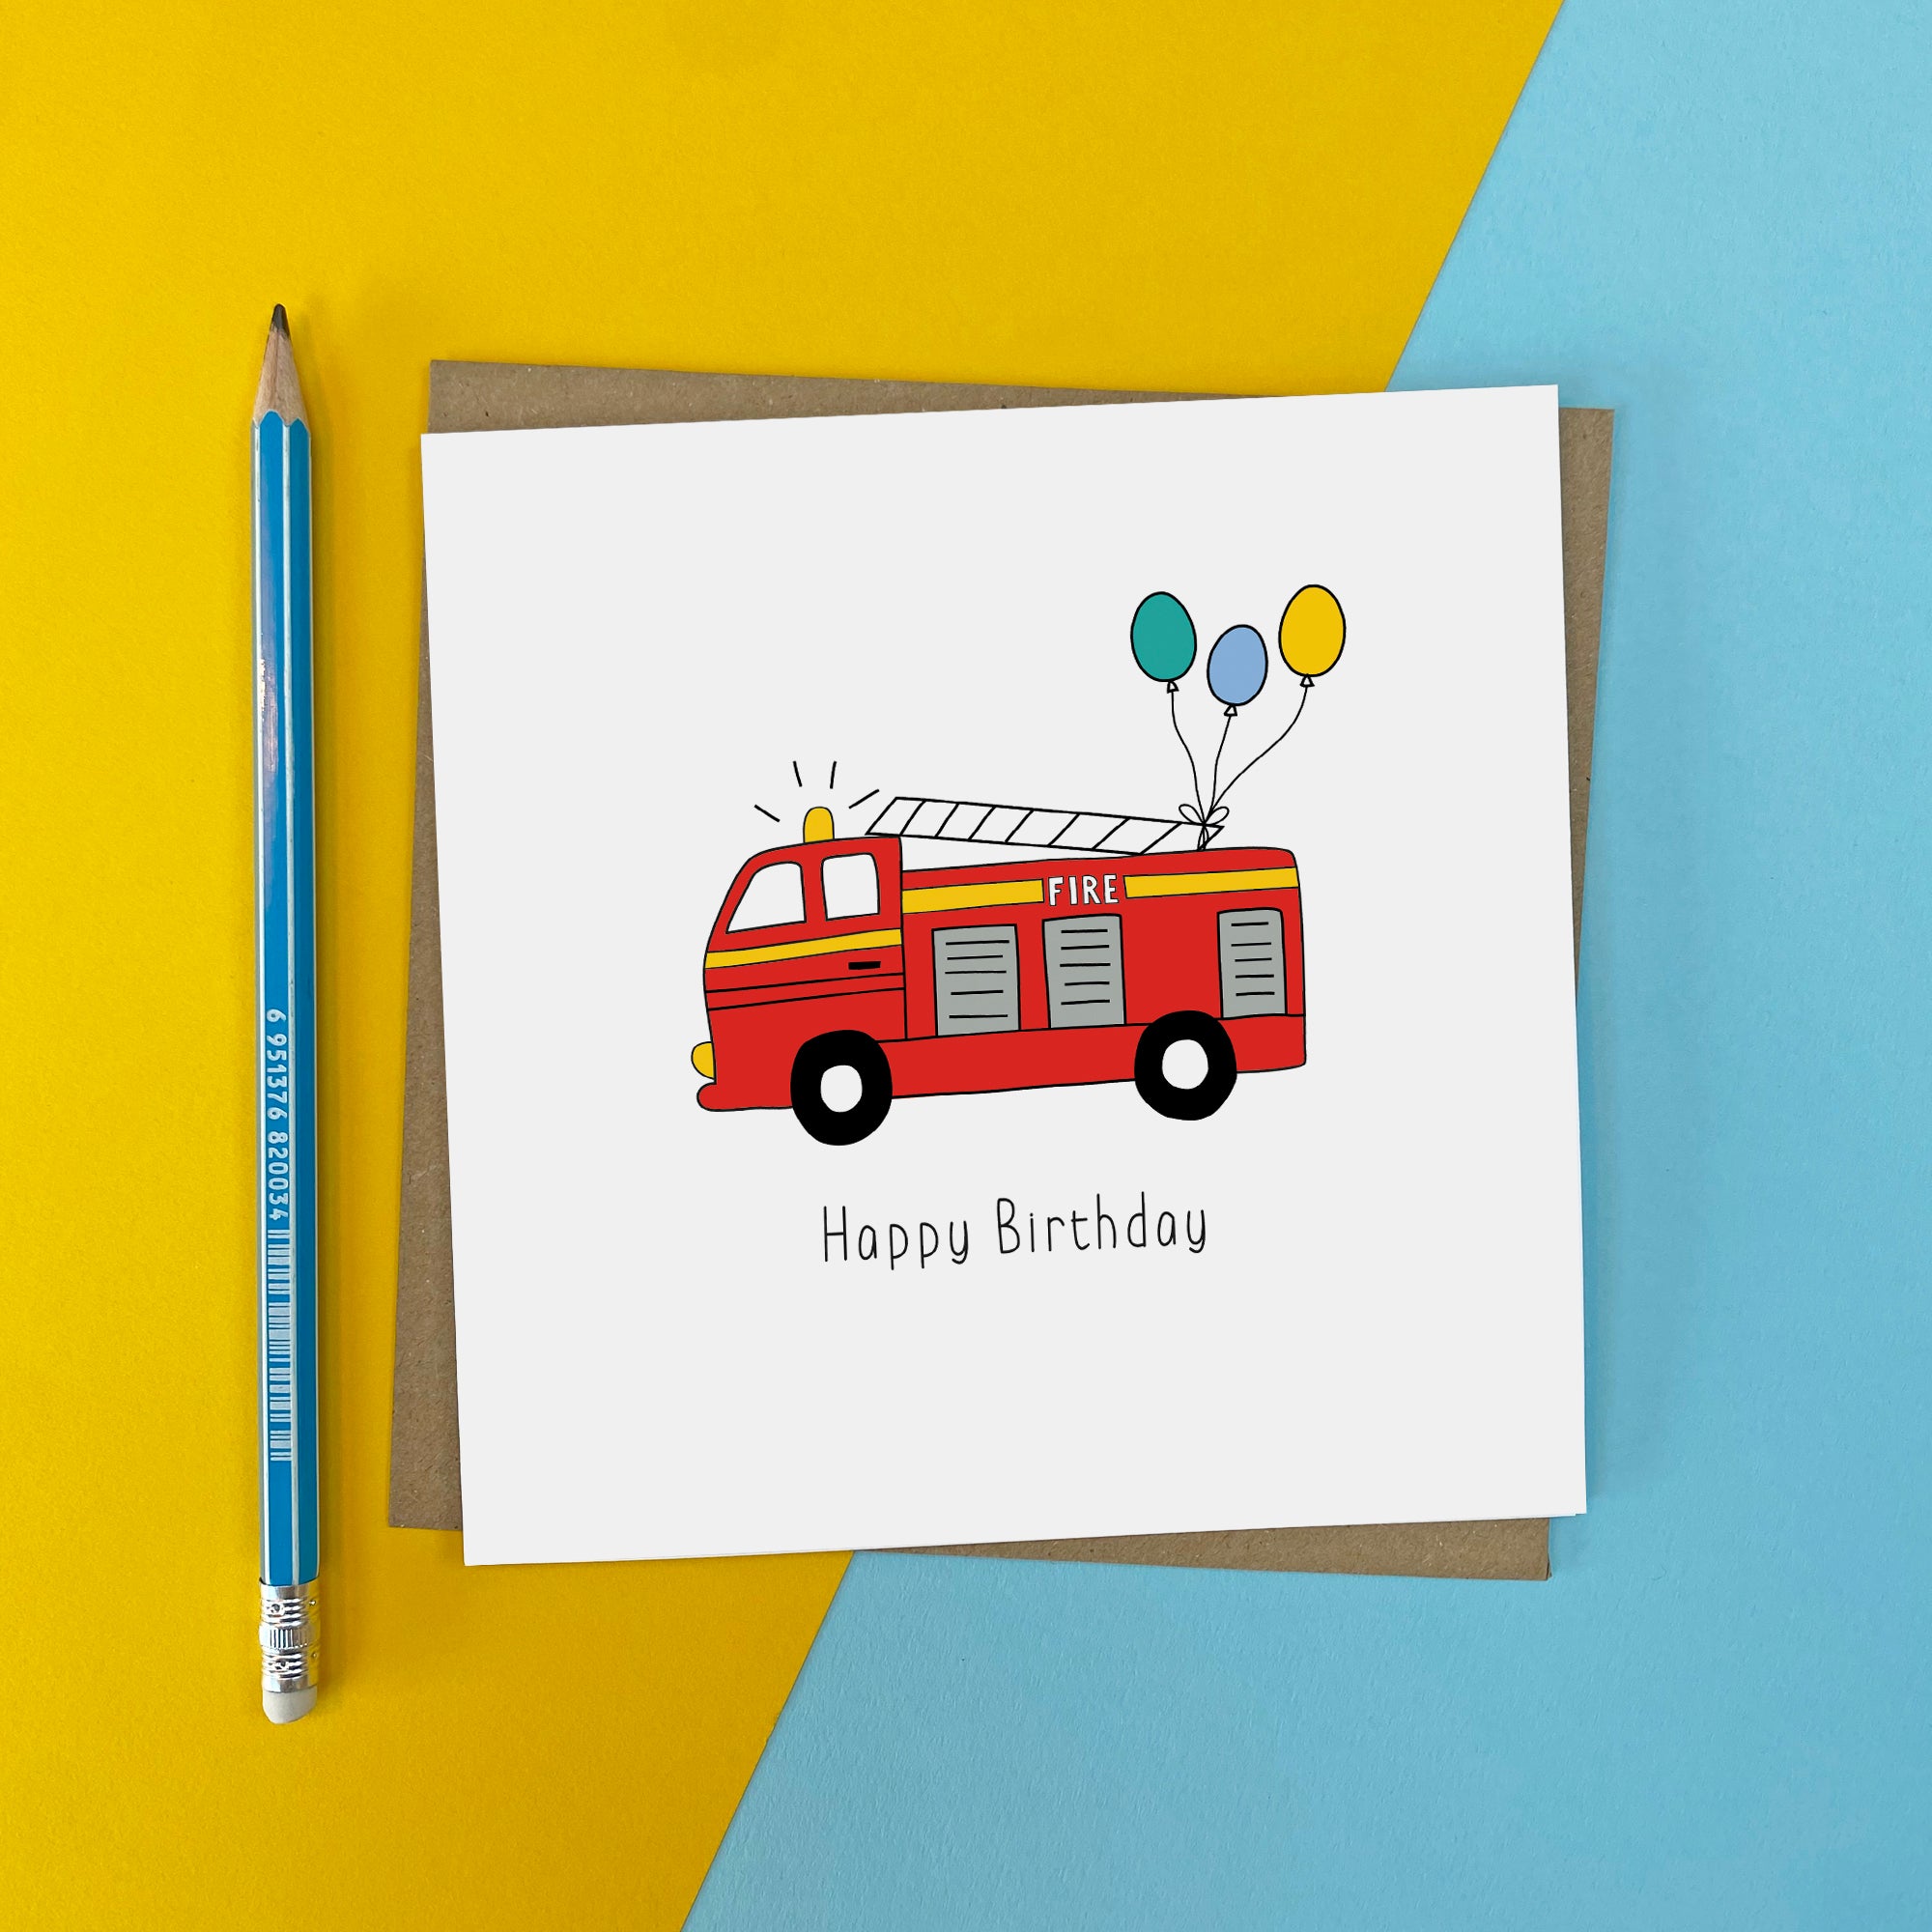 Fire engine birthday card